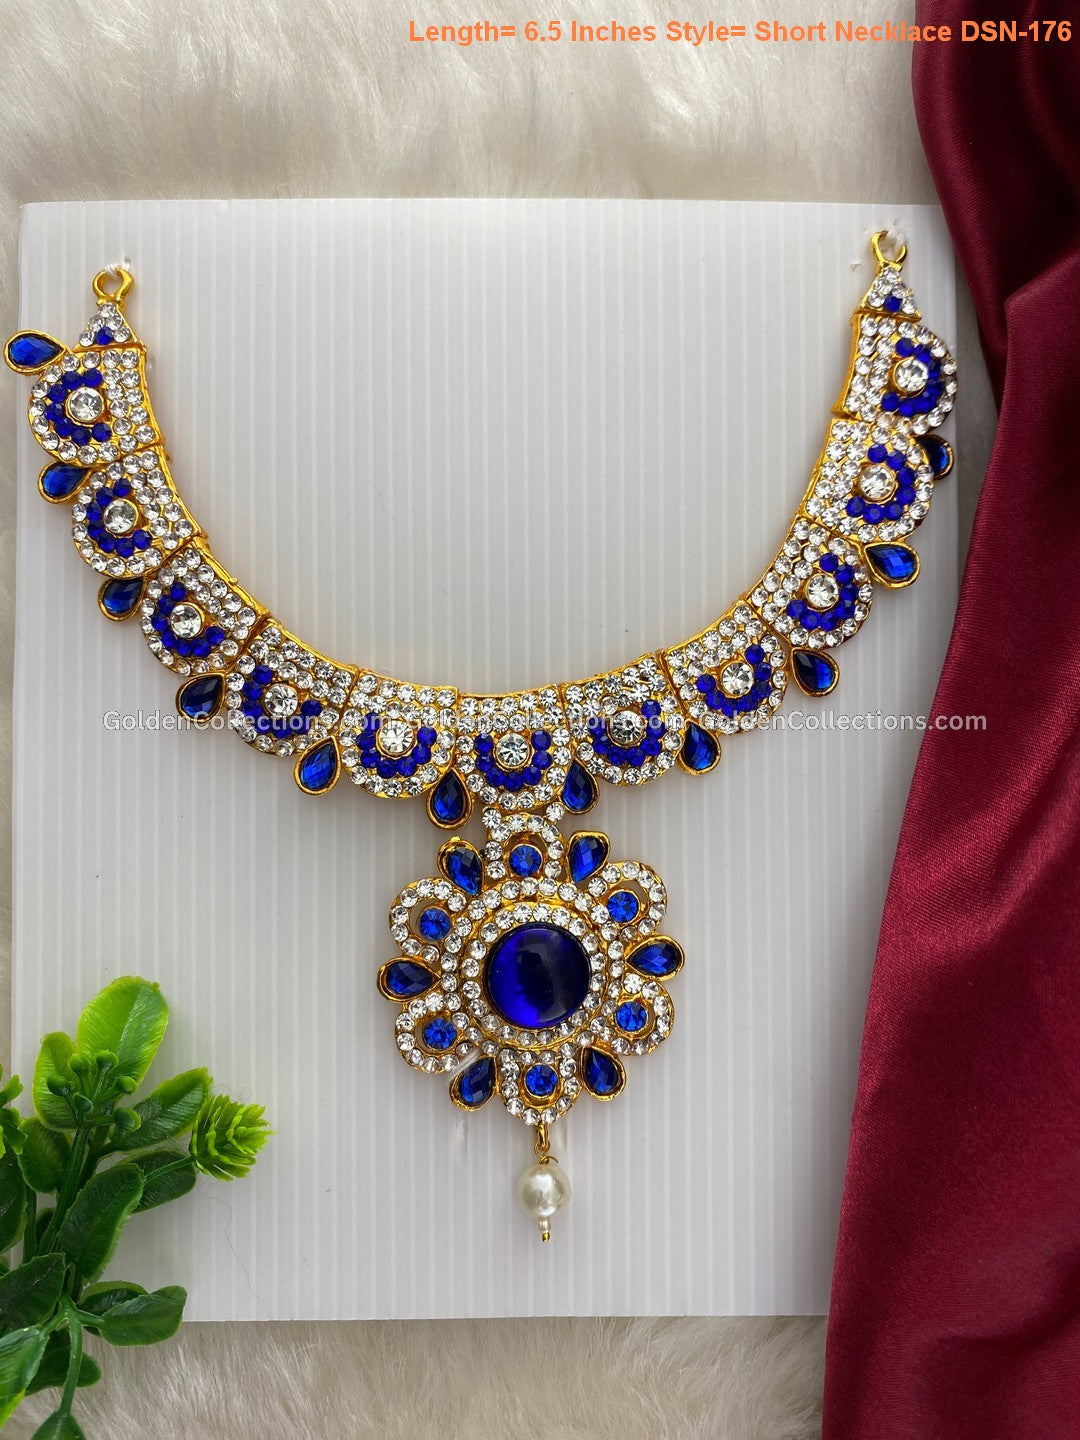 Deity Decorative Short Necklace - Hindu God Jewellery Set - DSN-176